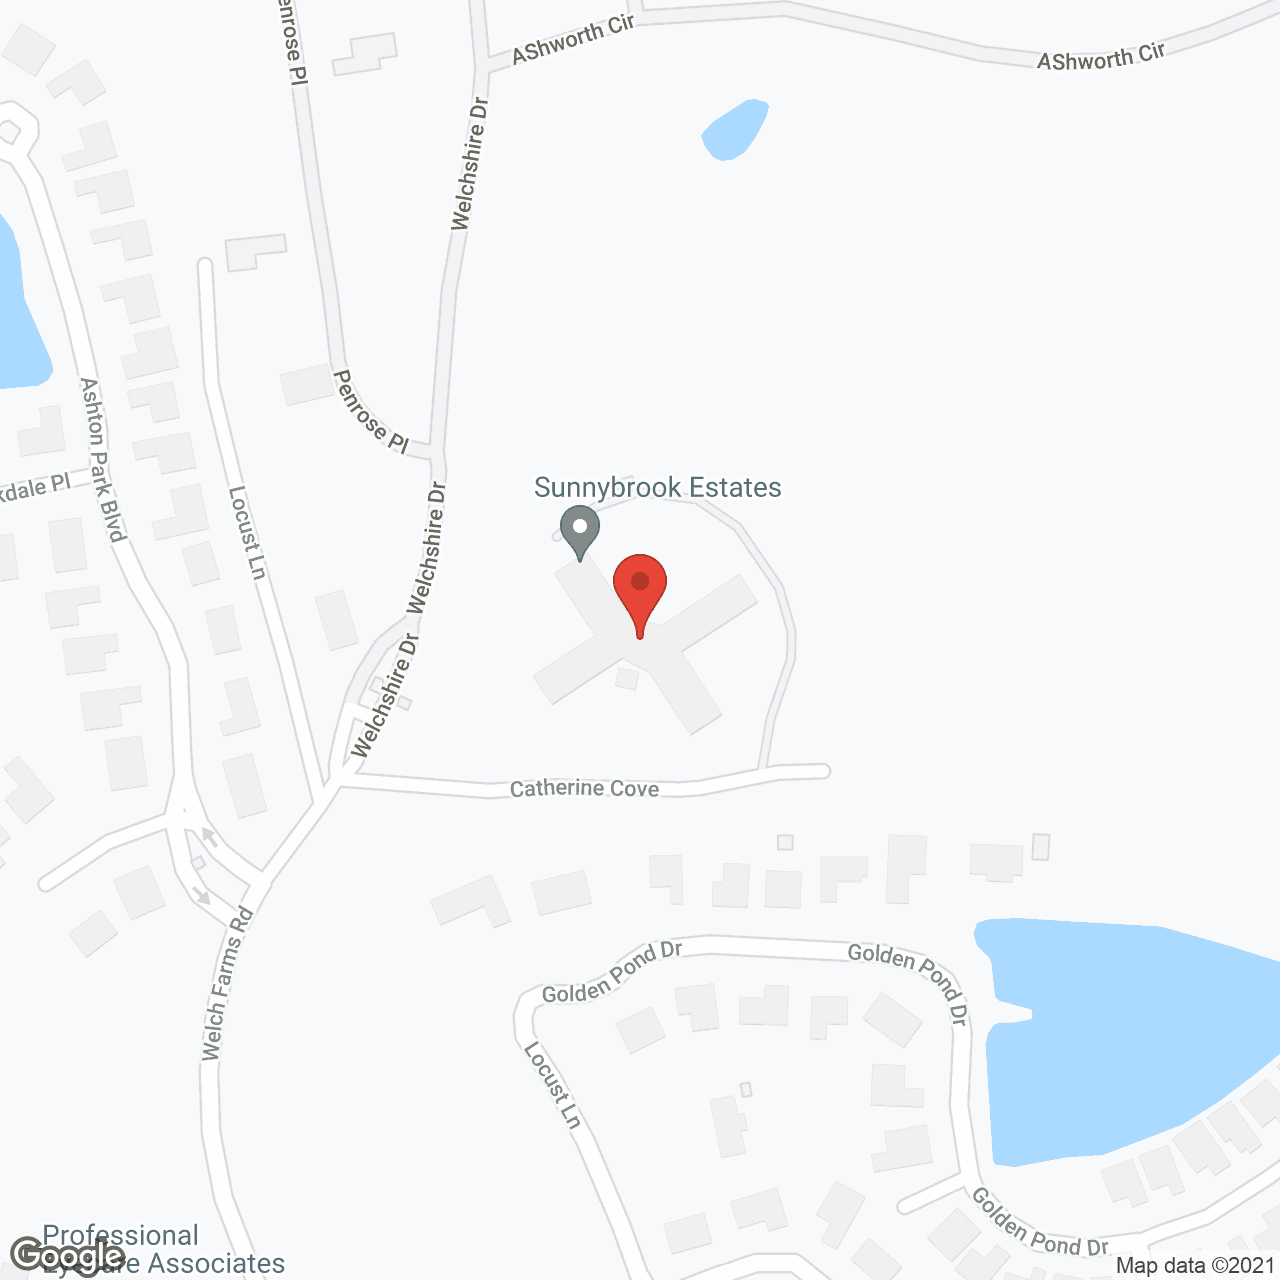 Sunnybrook Estates Retirement Community in google map